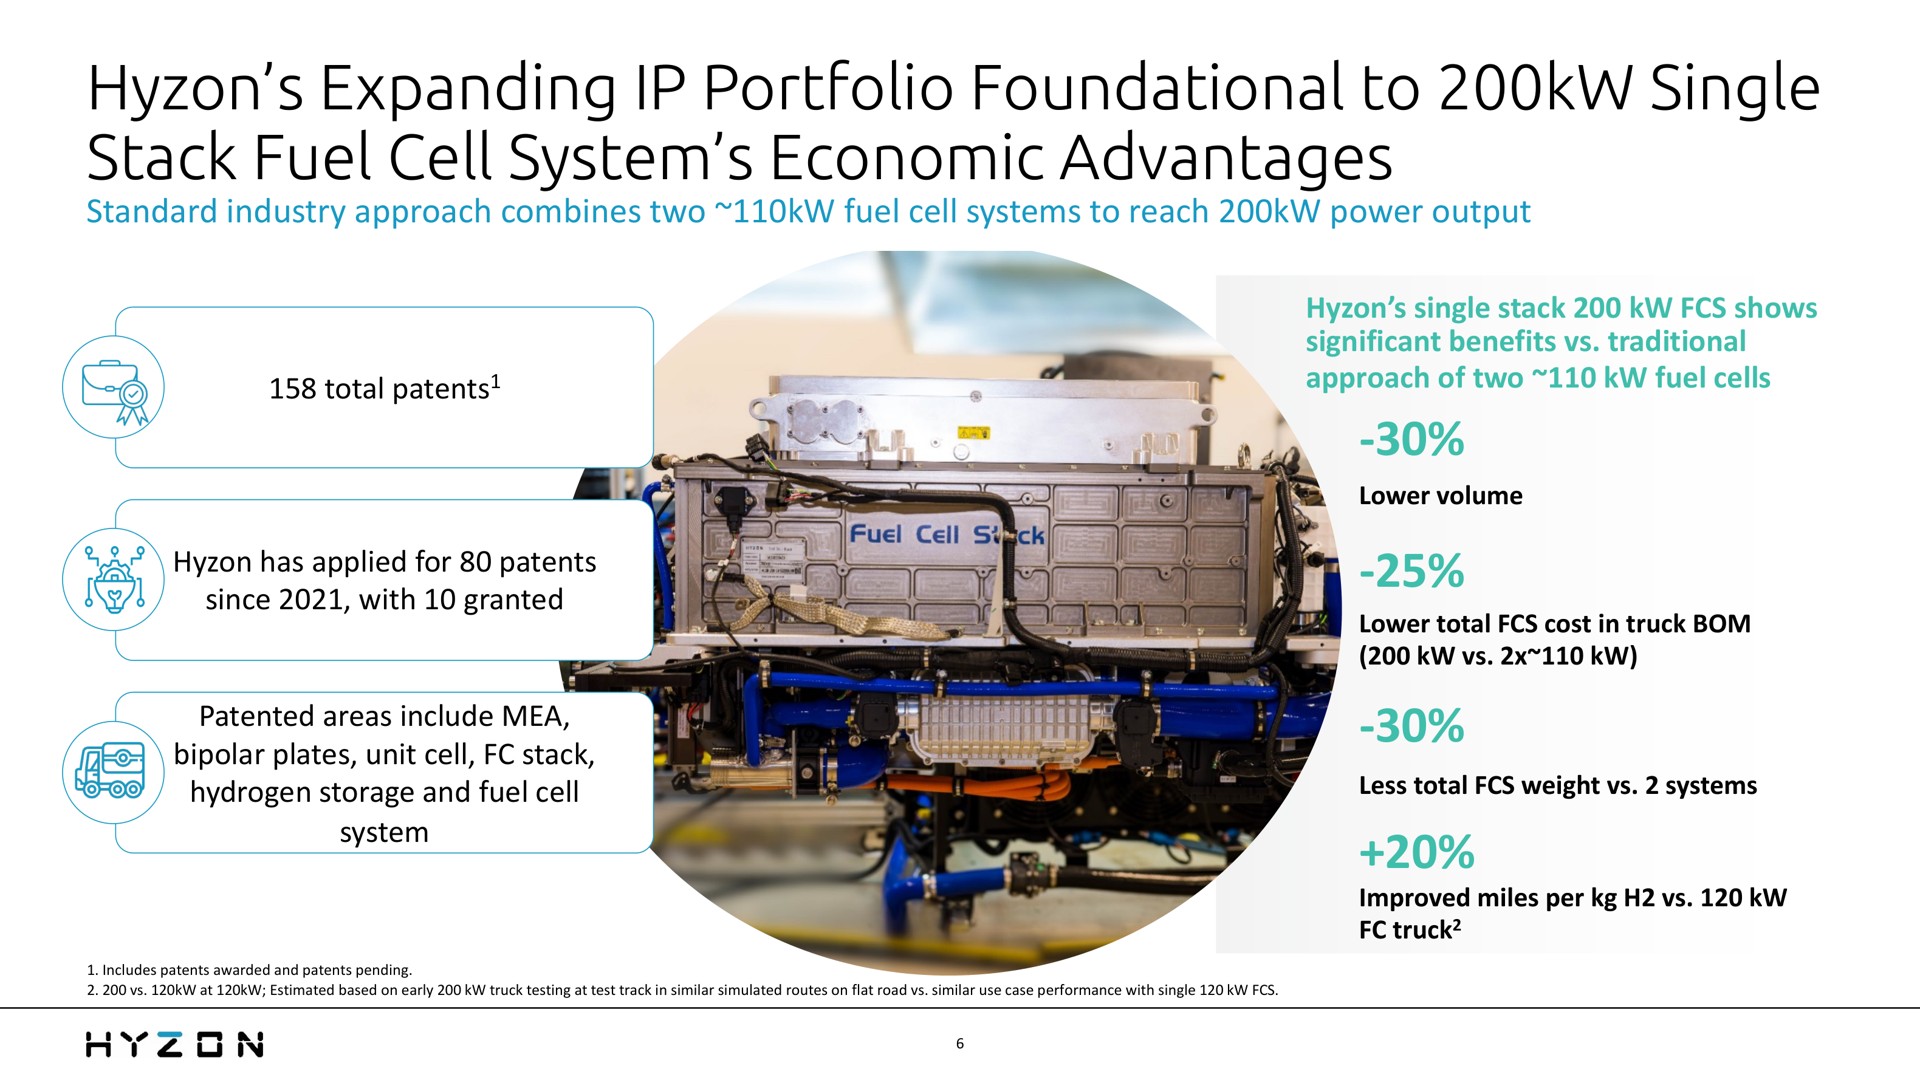 expanding portfolio foundational to single stack fuel cell system economic advantages | Hyzon